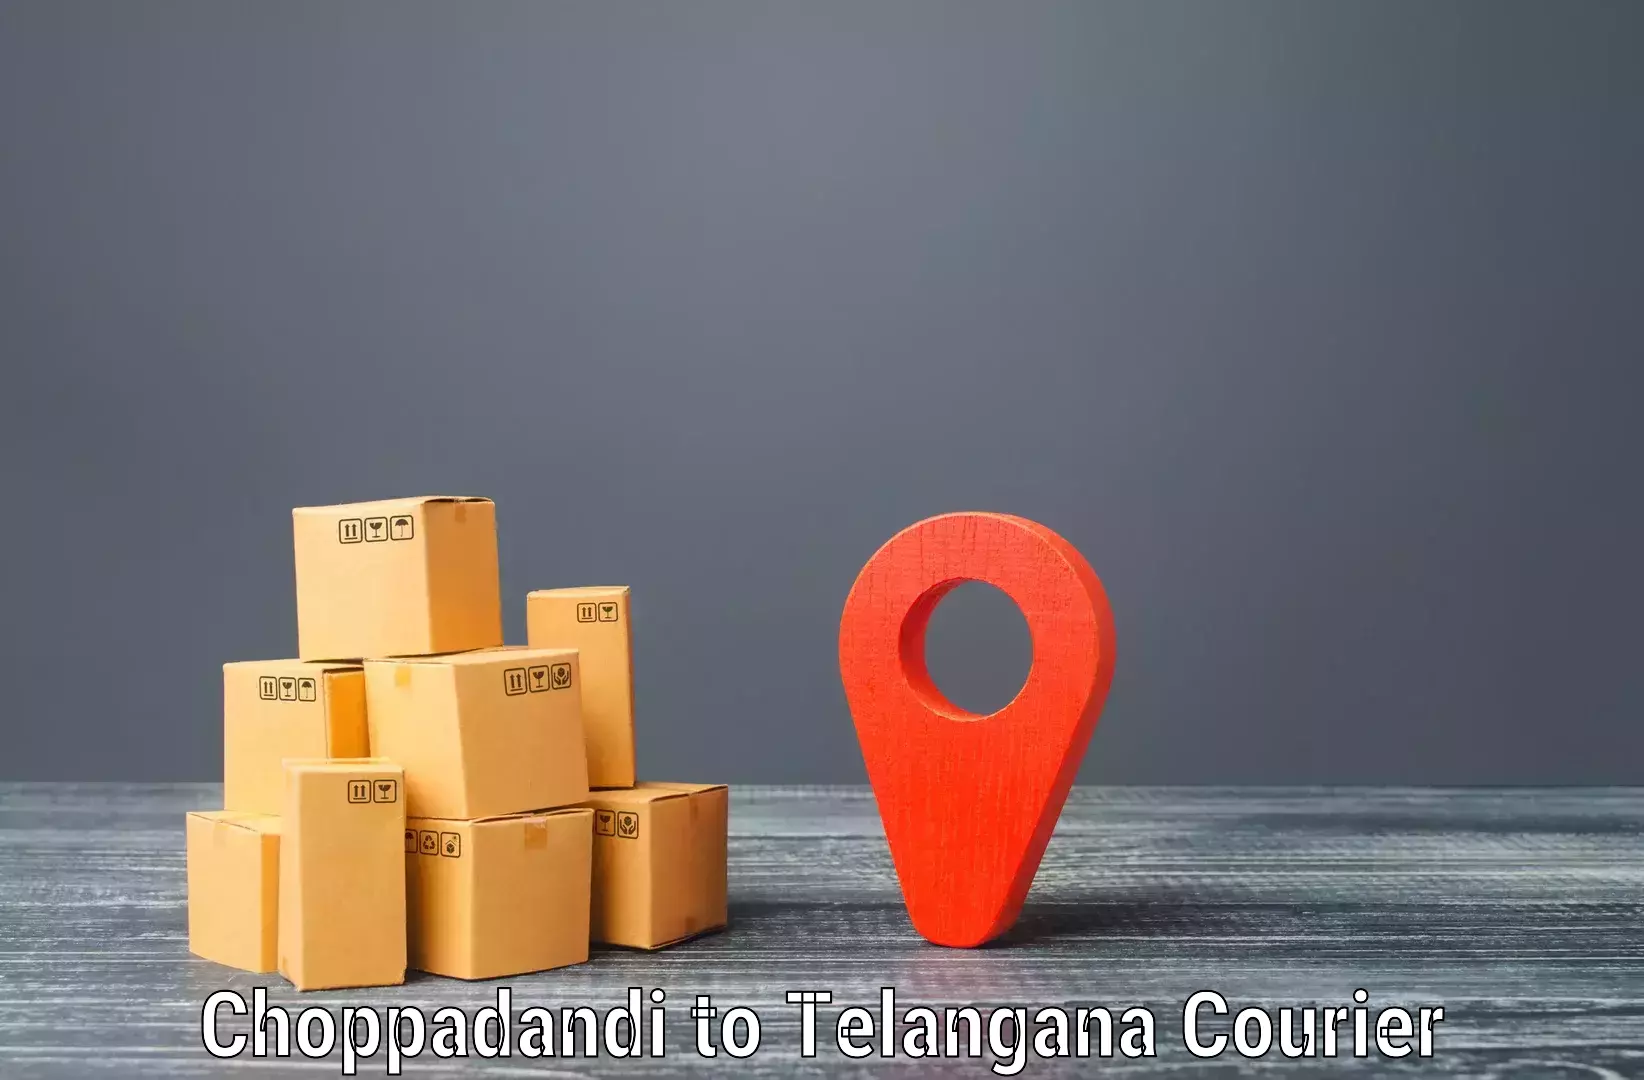 High-efficiency logistics Choppadandi to Bhongir